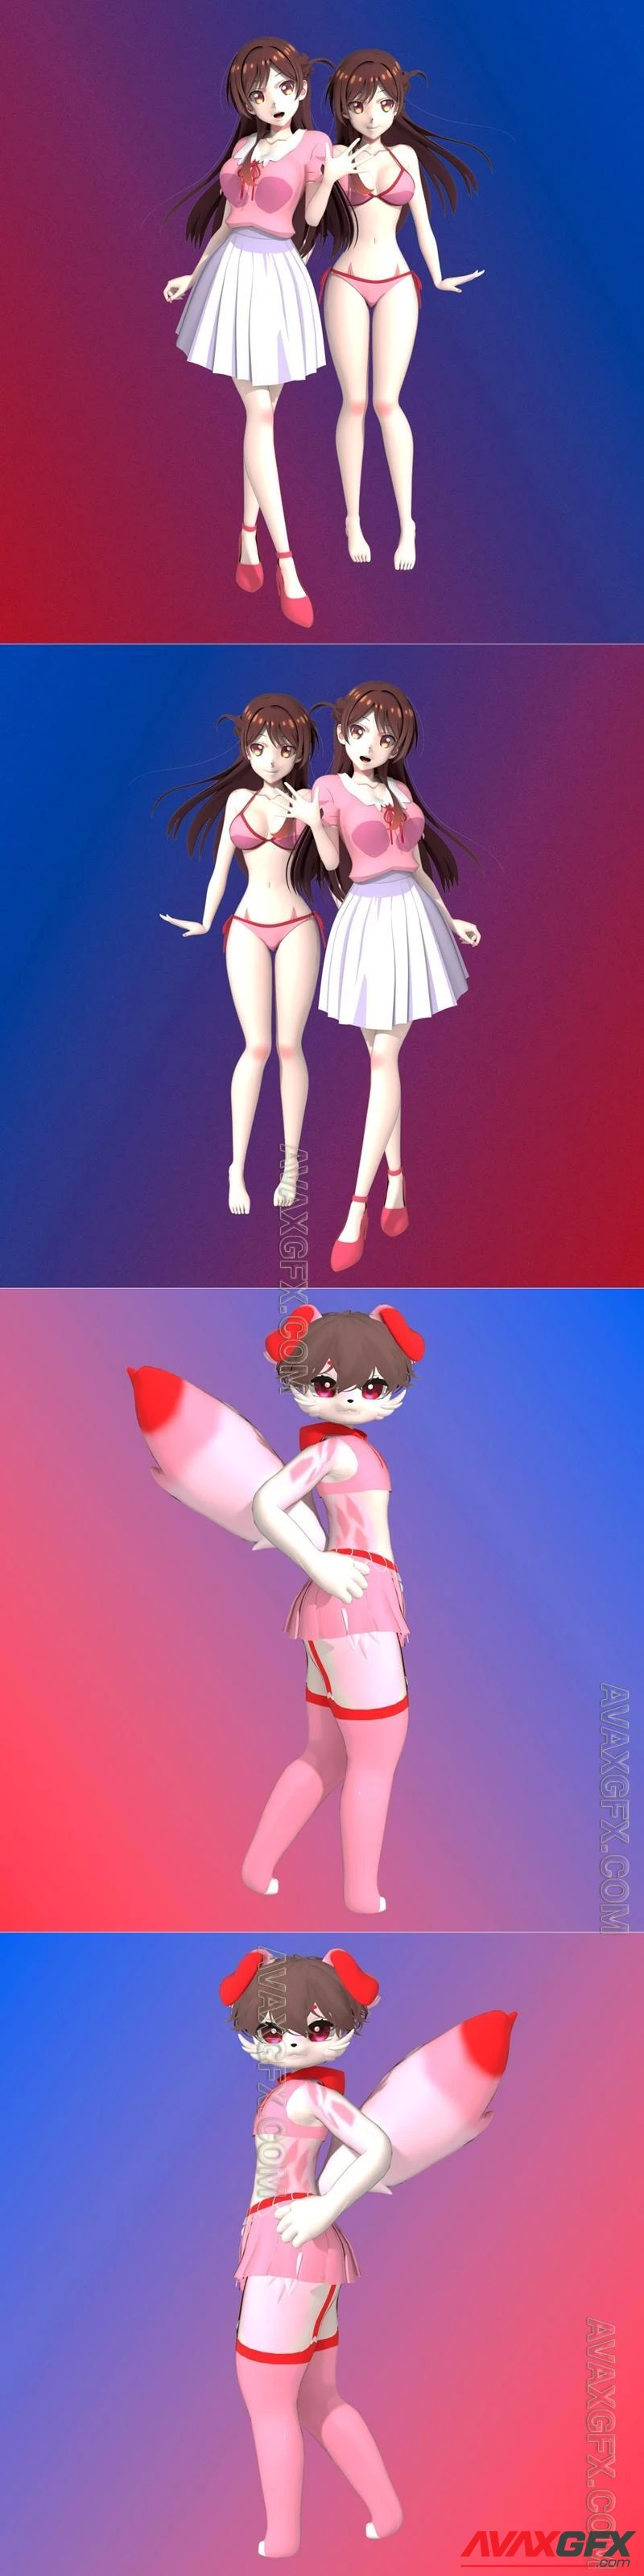 Chizuru Ichinose Rent a Girlfriend and Aephyx avatar - STL 3D Model